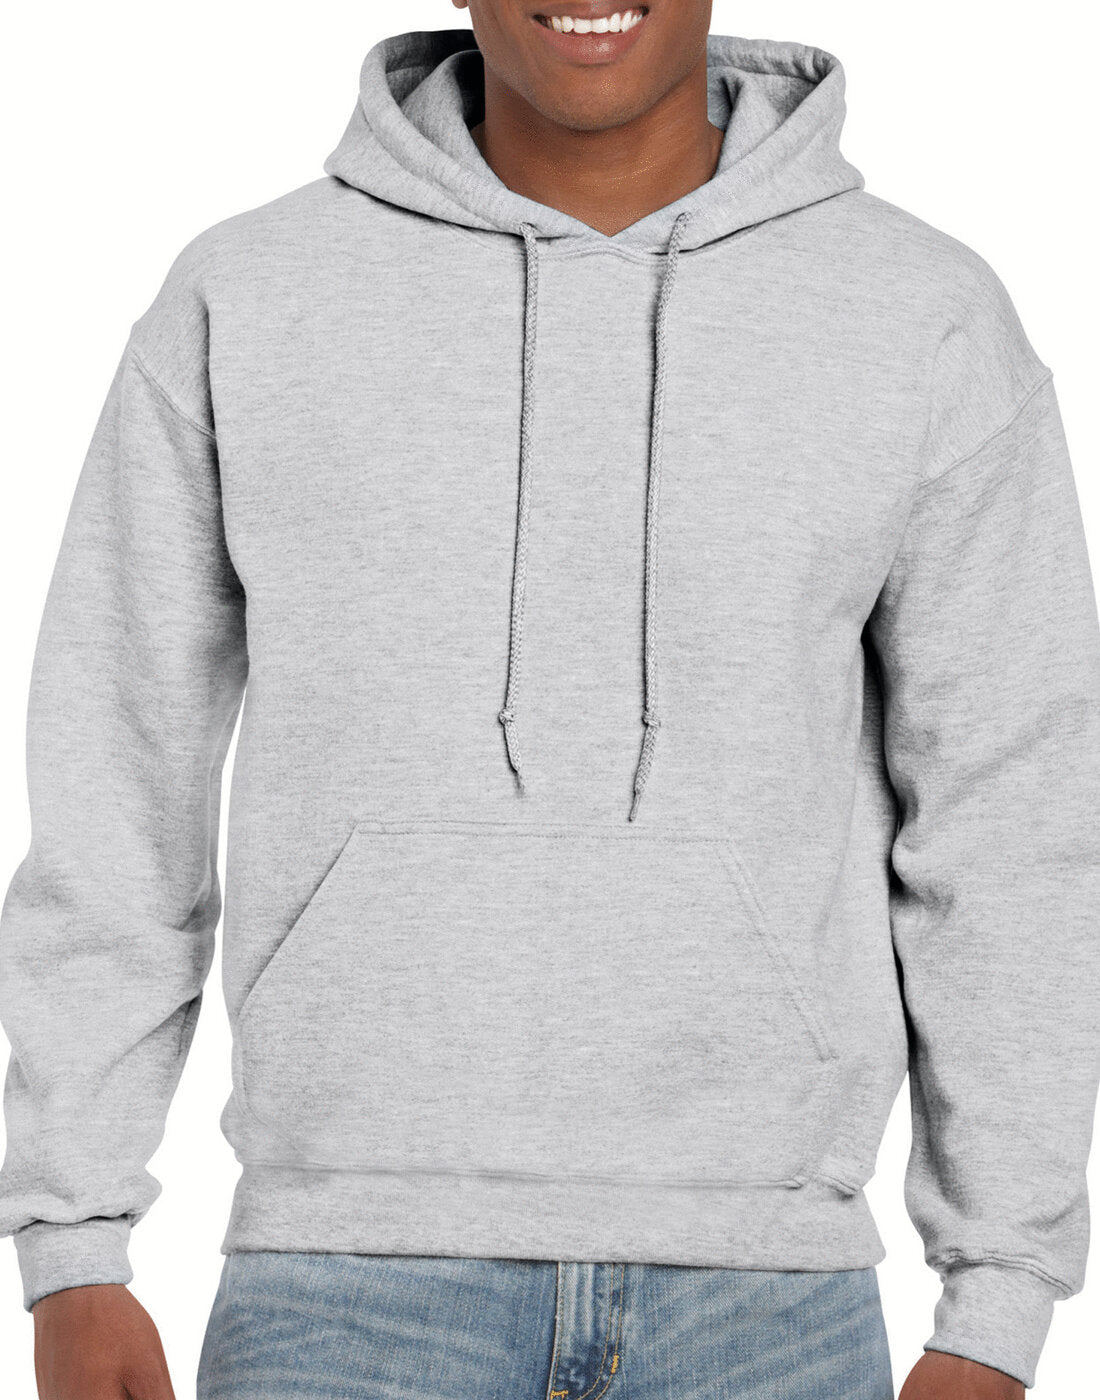 Gildan Dryblend Adult Hooded Sweatshirt - Ash